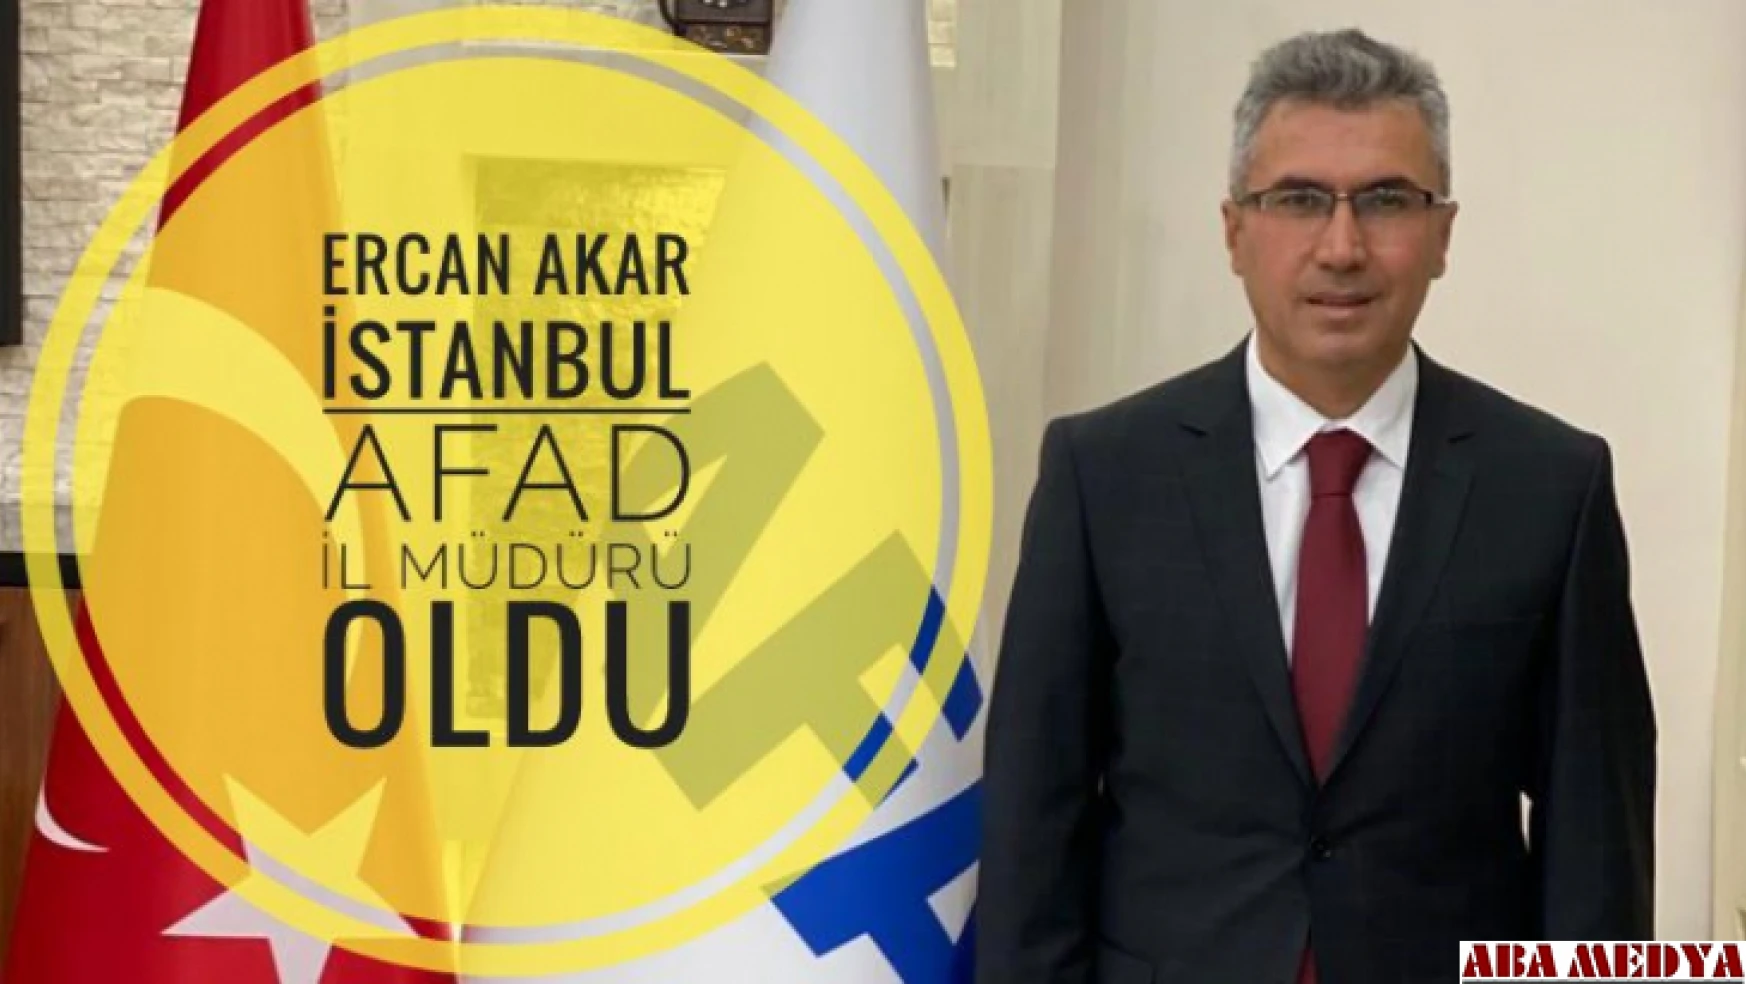 Ercan Akar AFAD İstanbul İl Müdürü Oldu